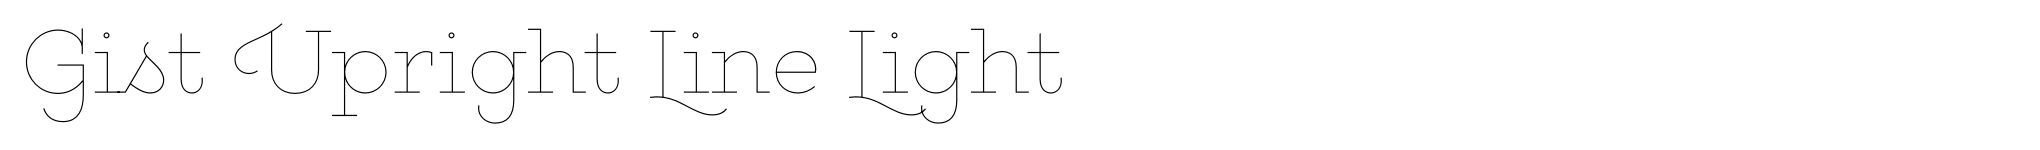 Gist Upright Line Light image